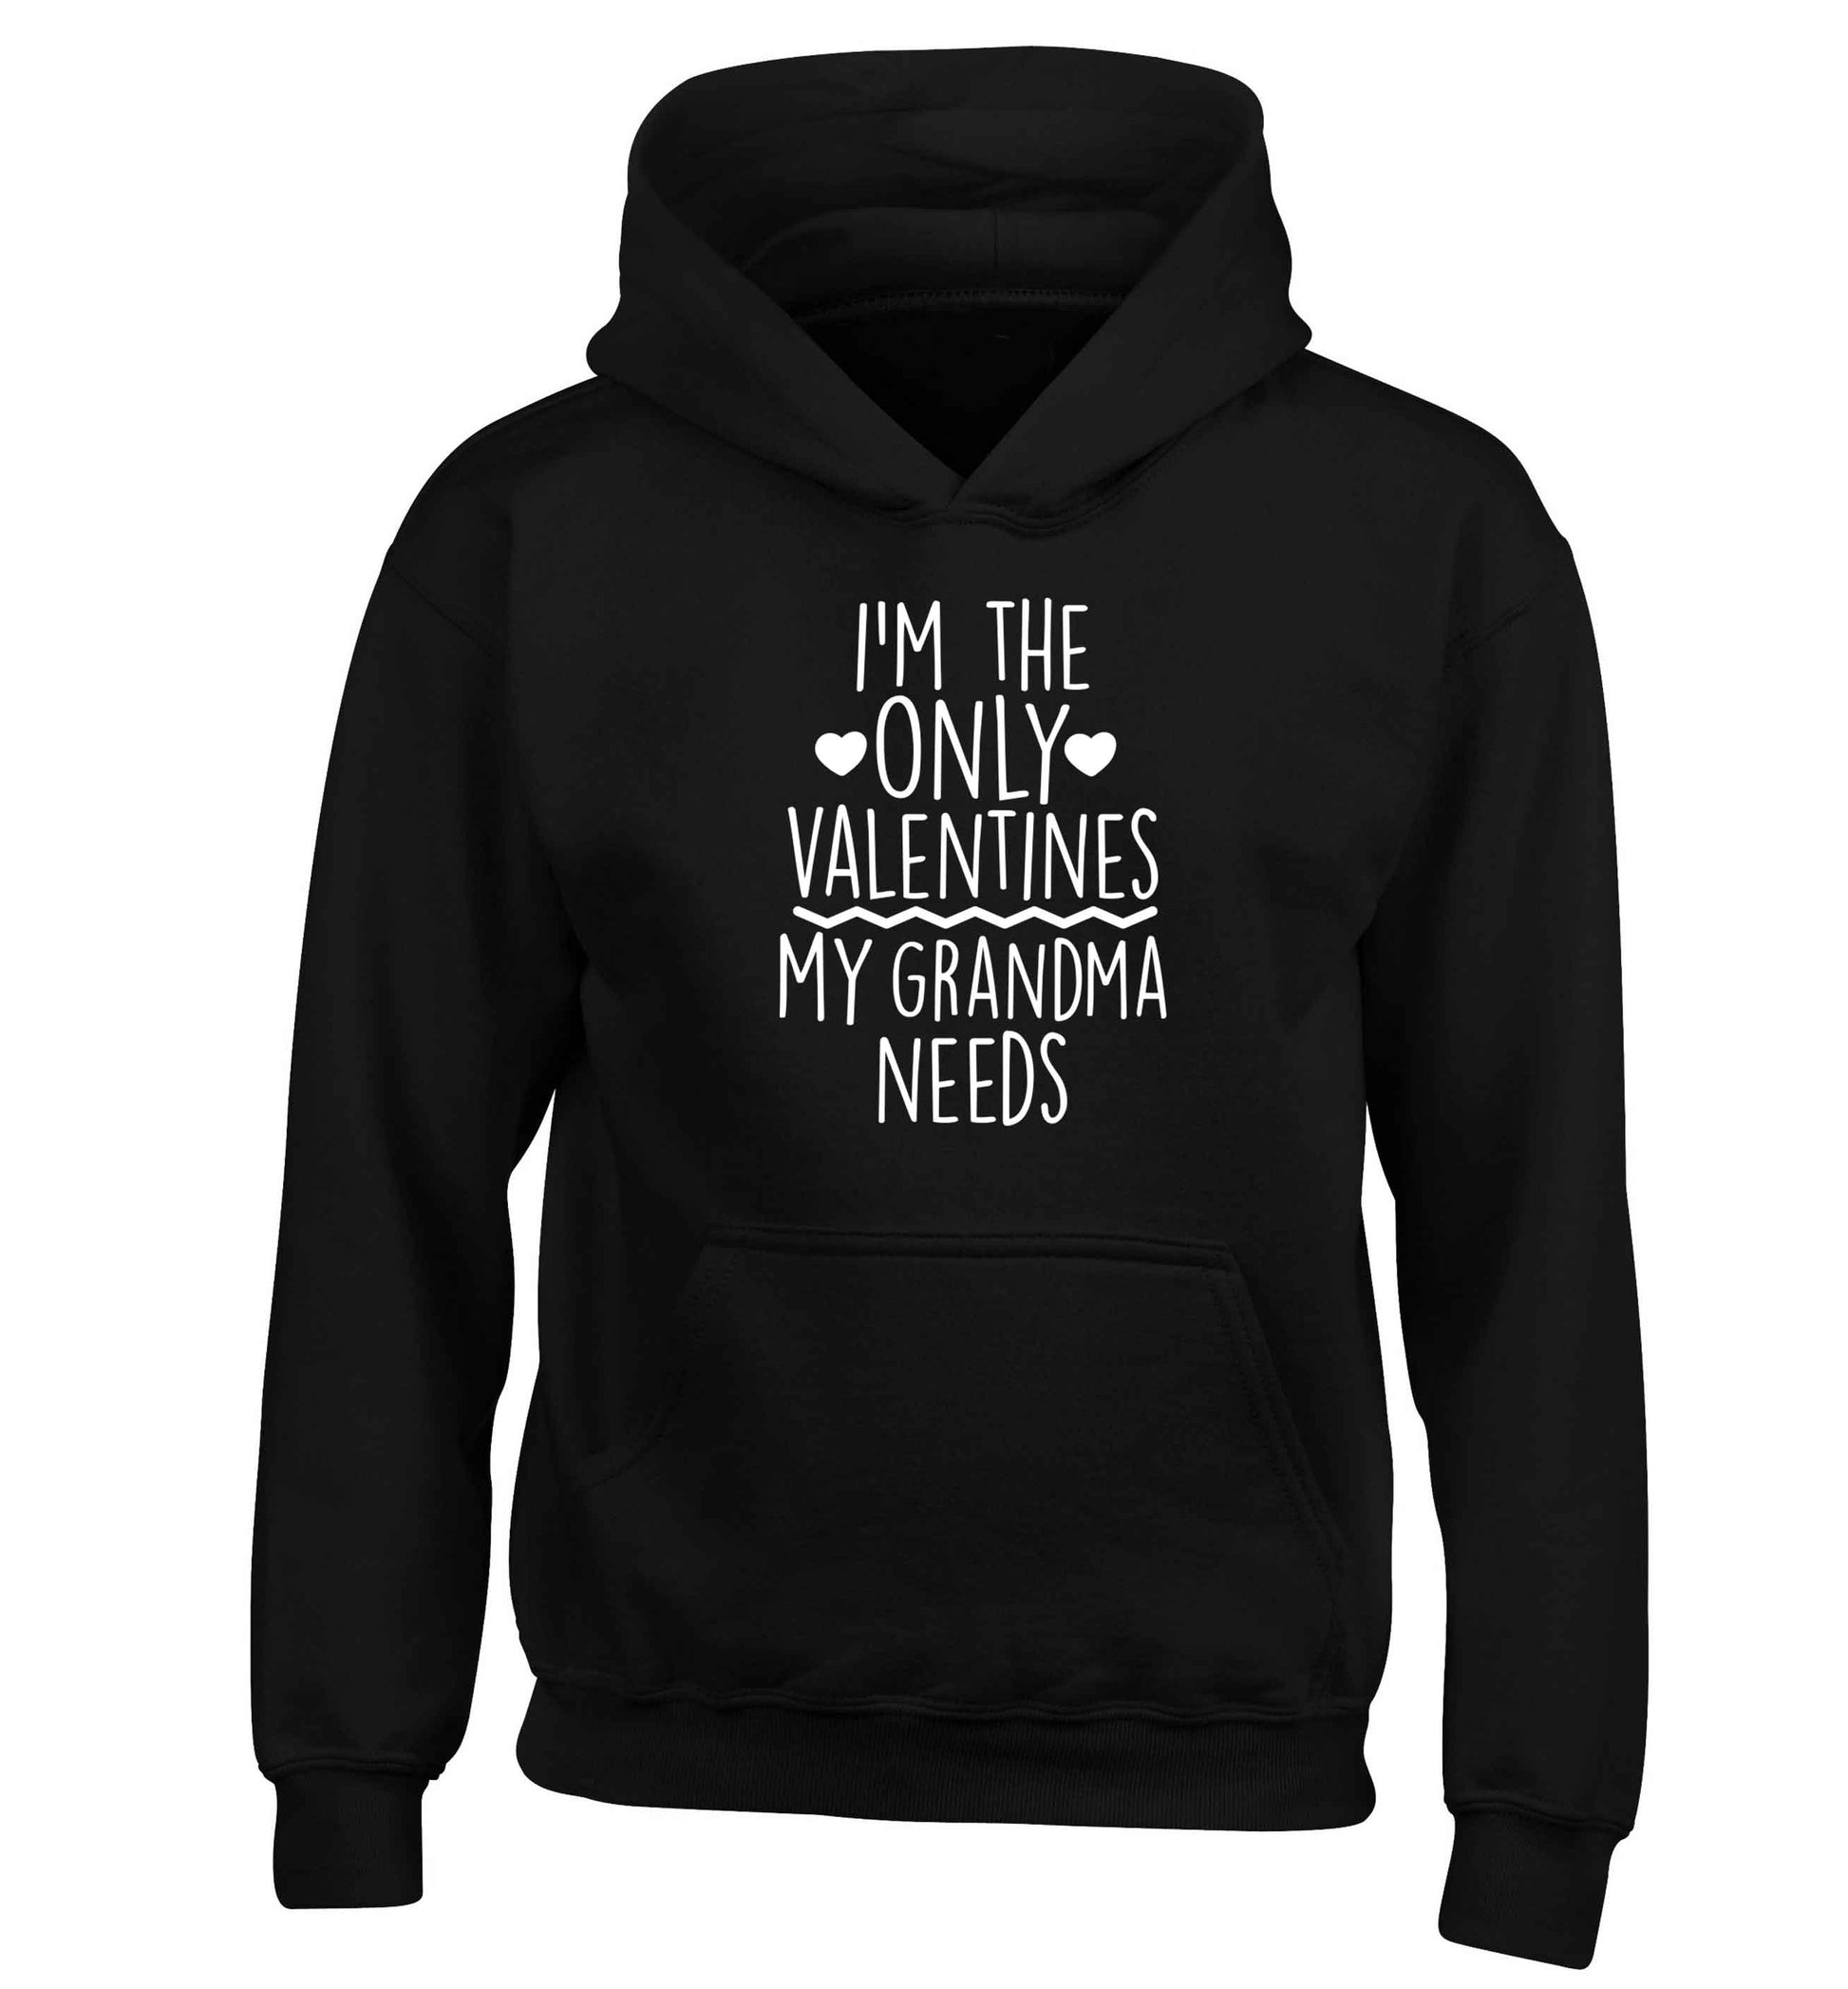 I'm the only valentines my grandma needs children's black hoodie 12-13 Years